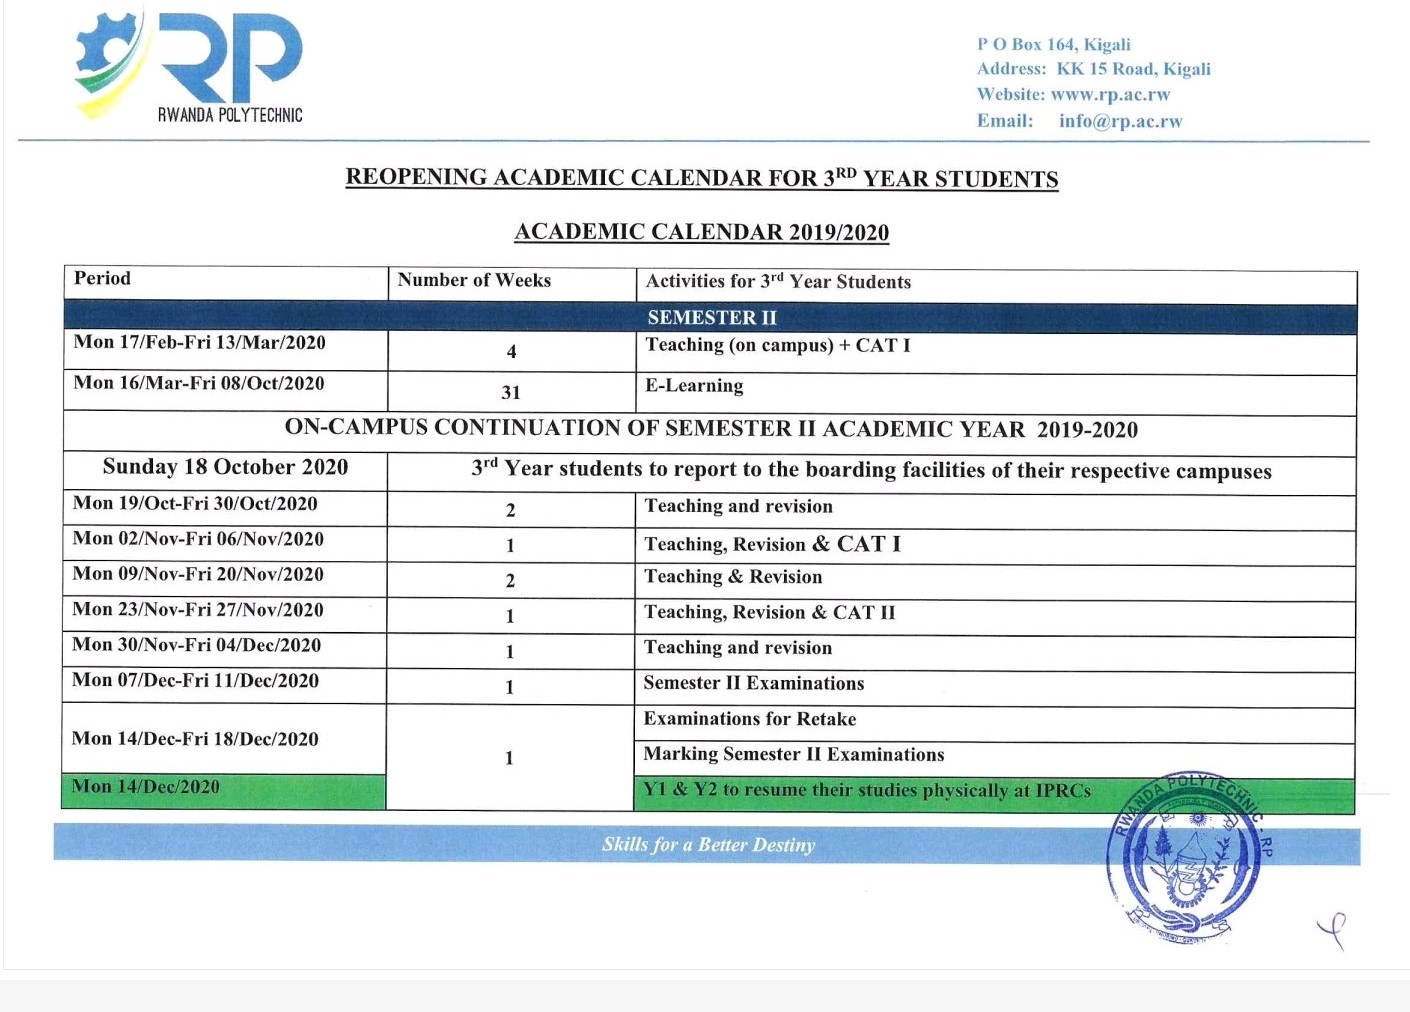 Rwanda PolytechnicThe reopening Academic calendar for the 3rd year